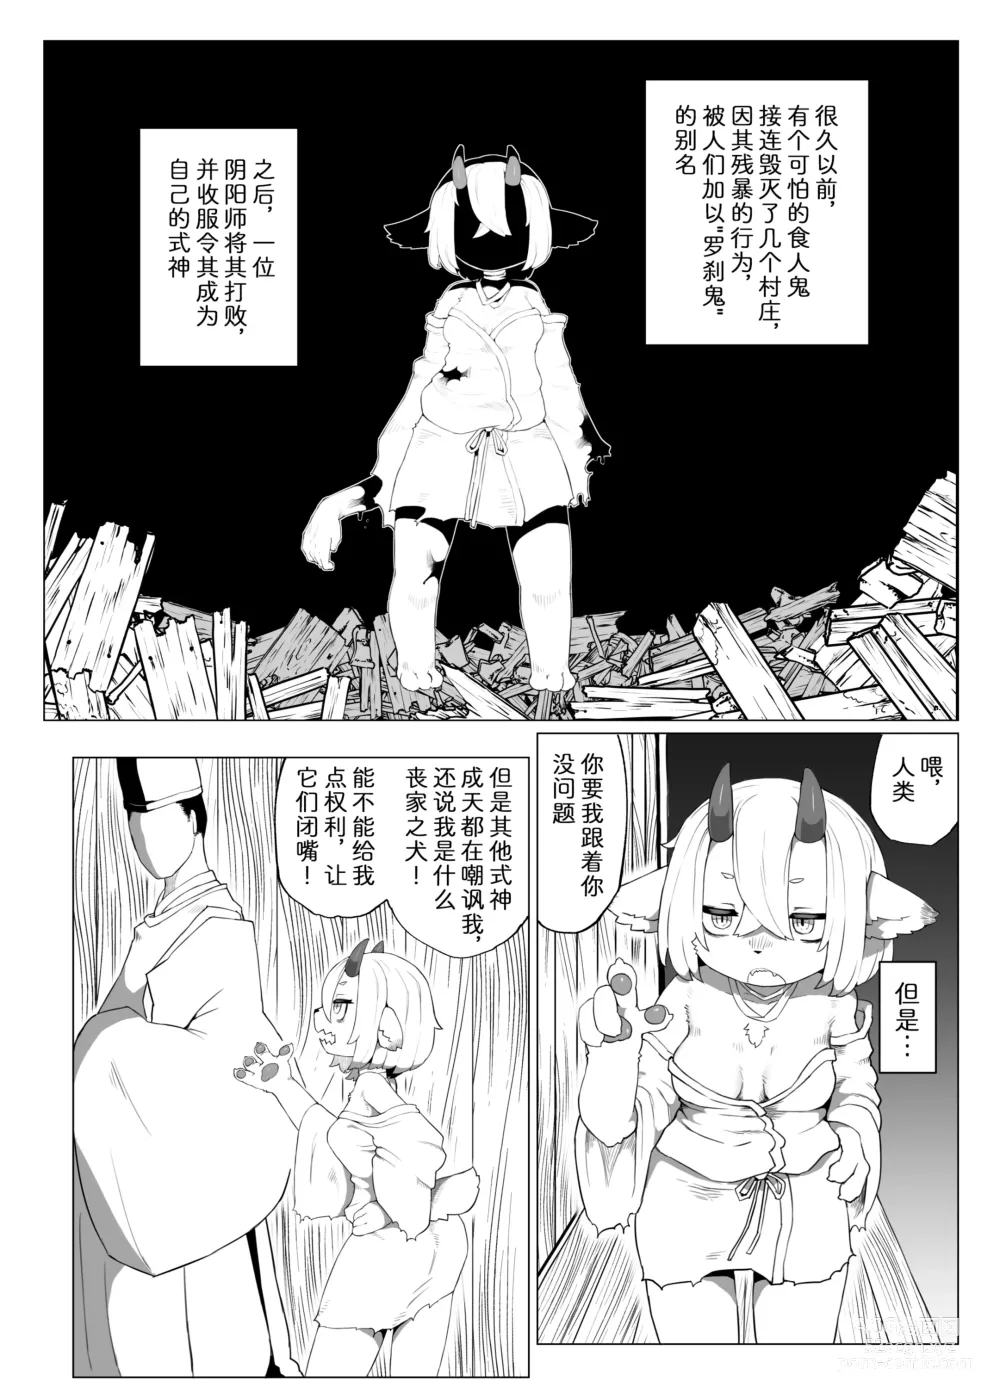 Page 4 of doujinshi 吃什么就要生什么!食人鬼可畏酱